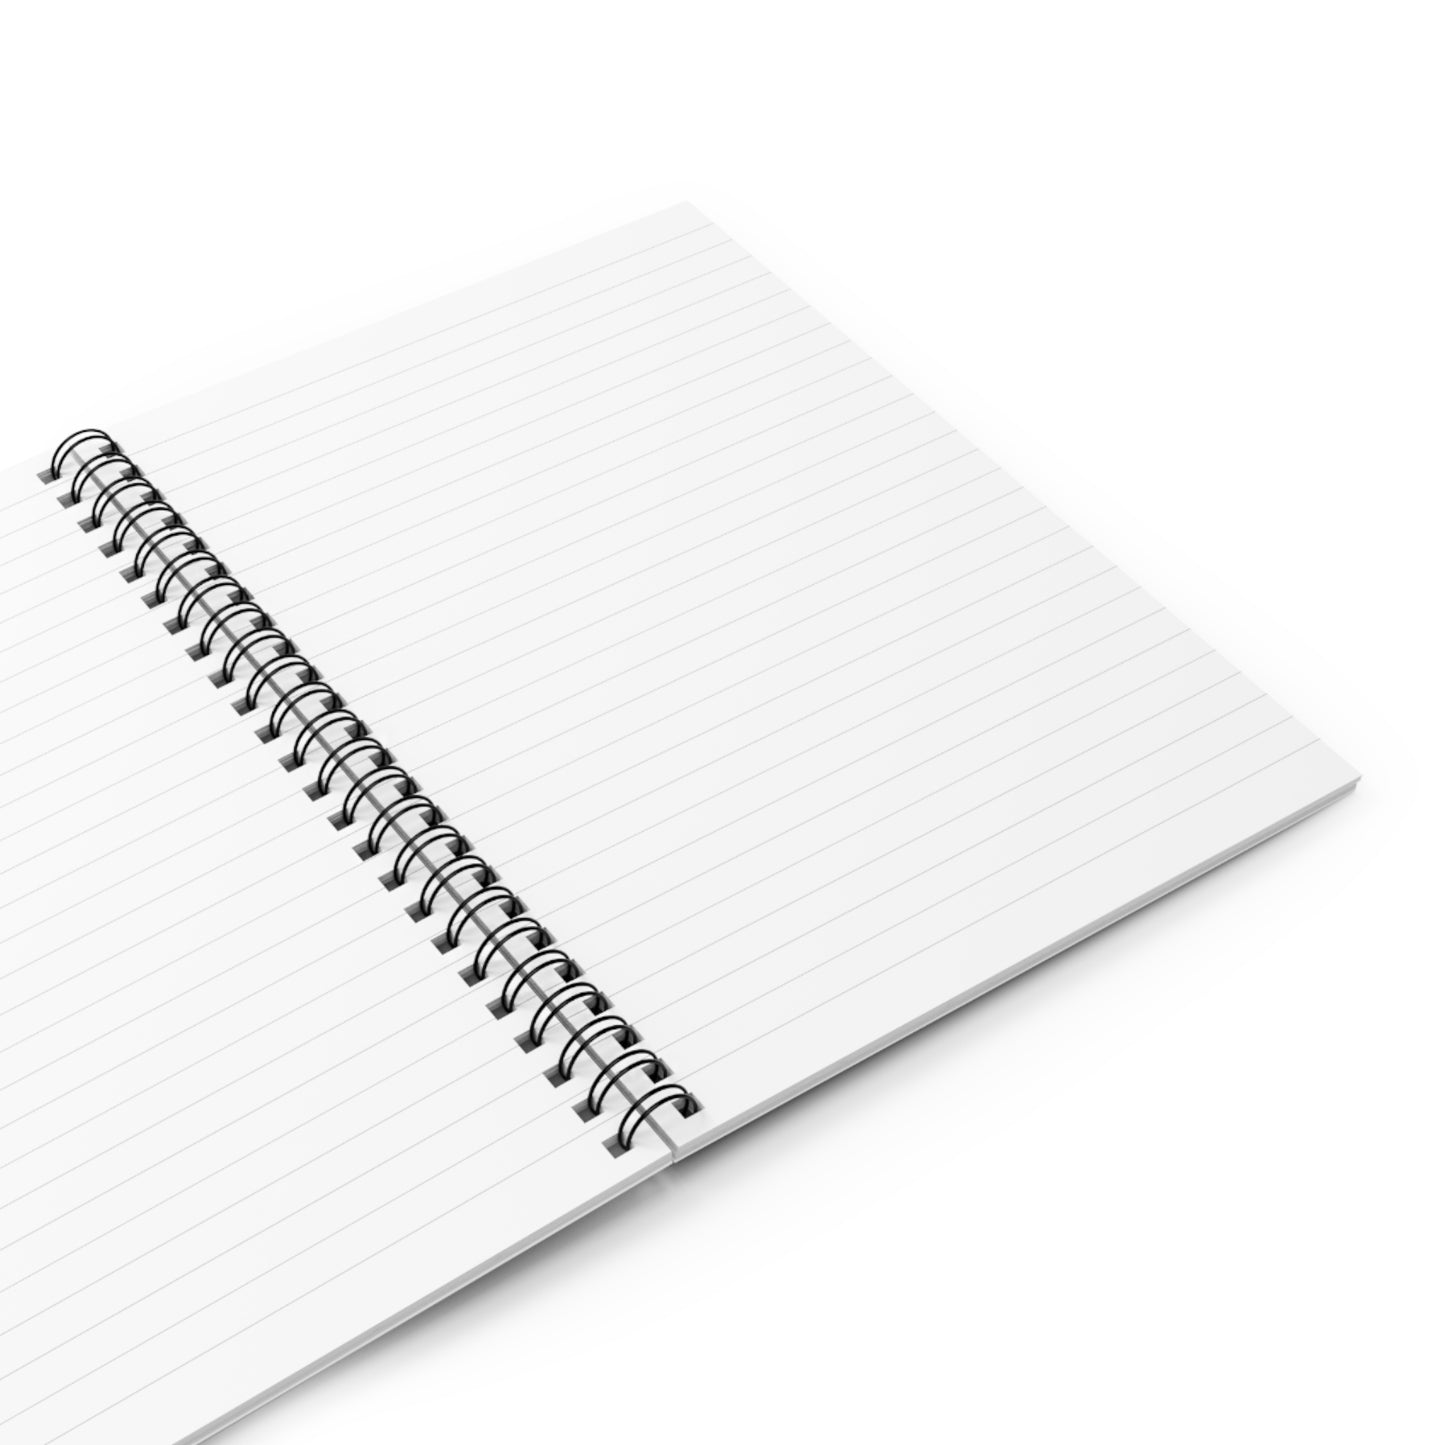 Lady Washington Spiral Notebook - Ruled Line